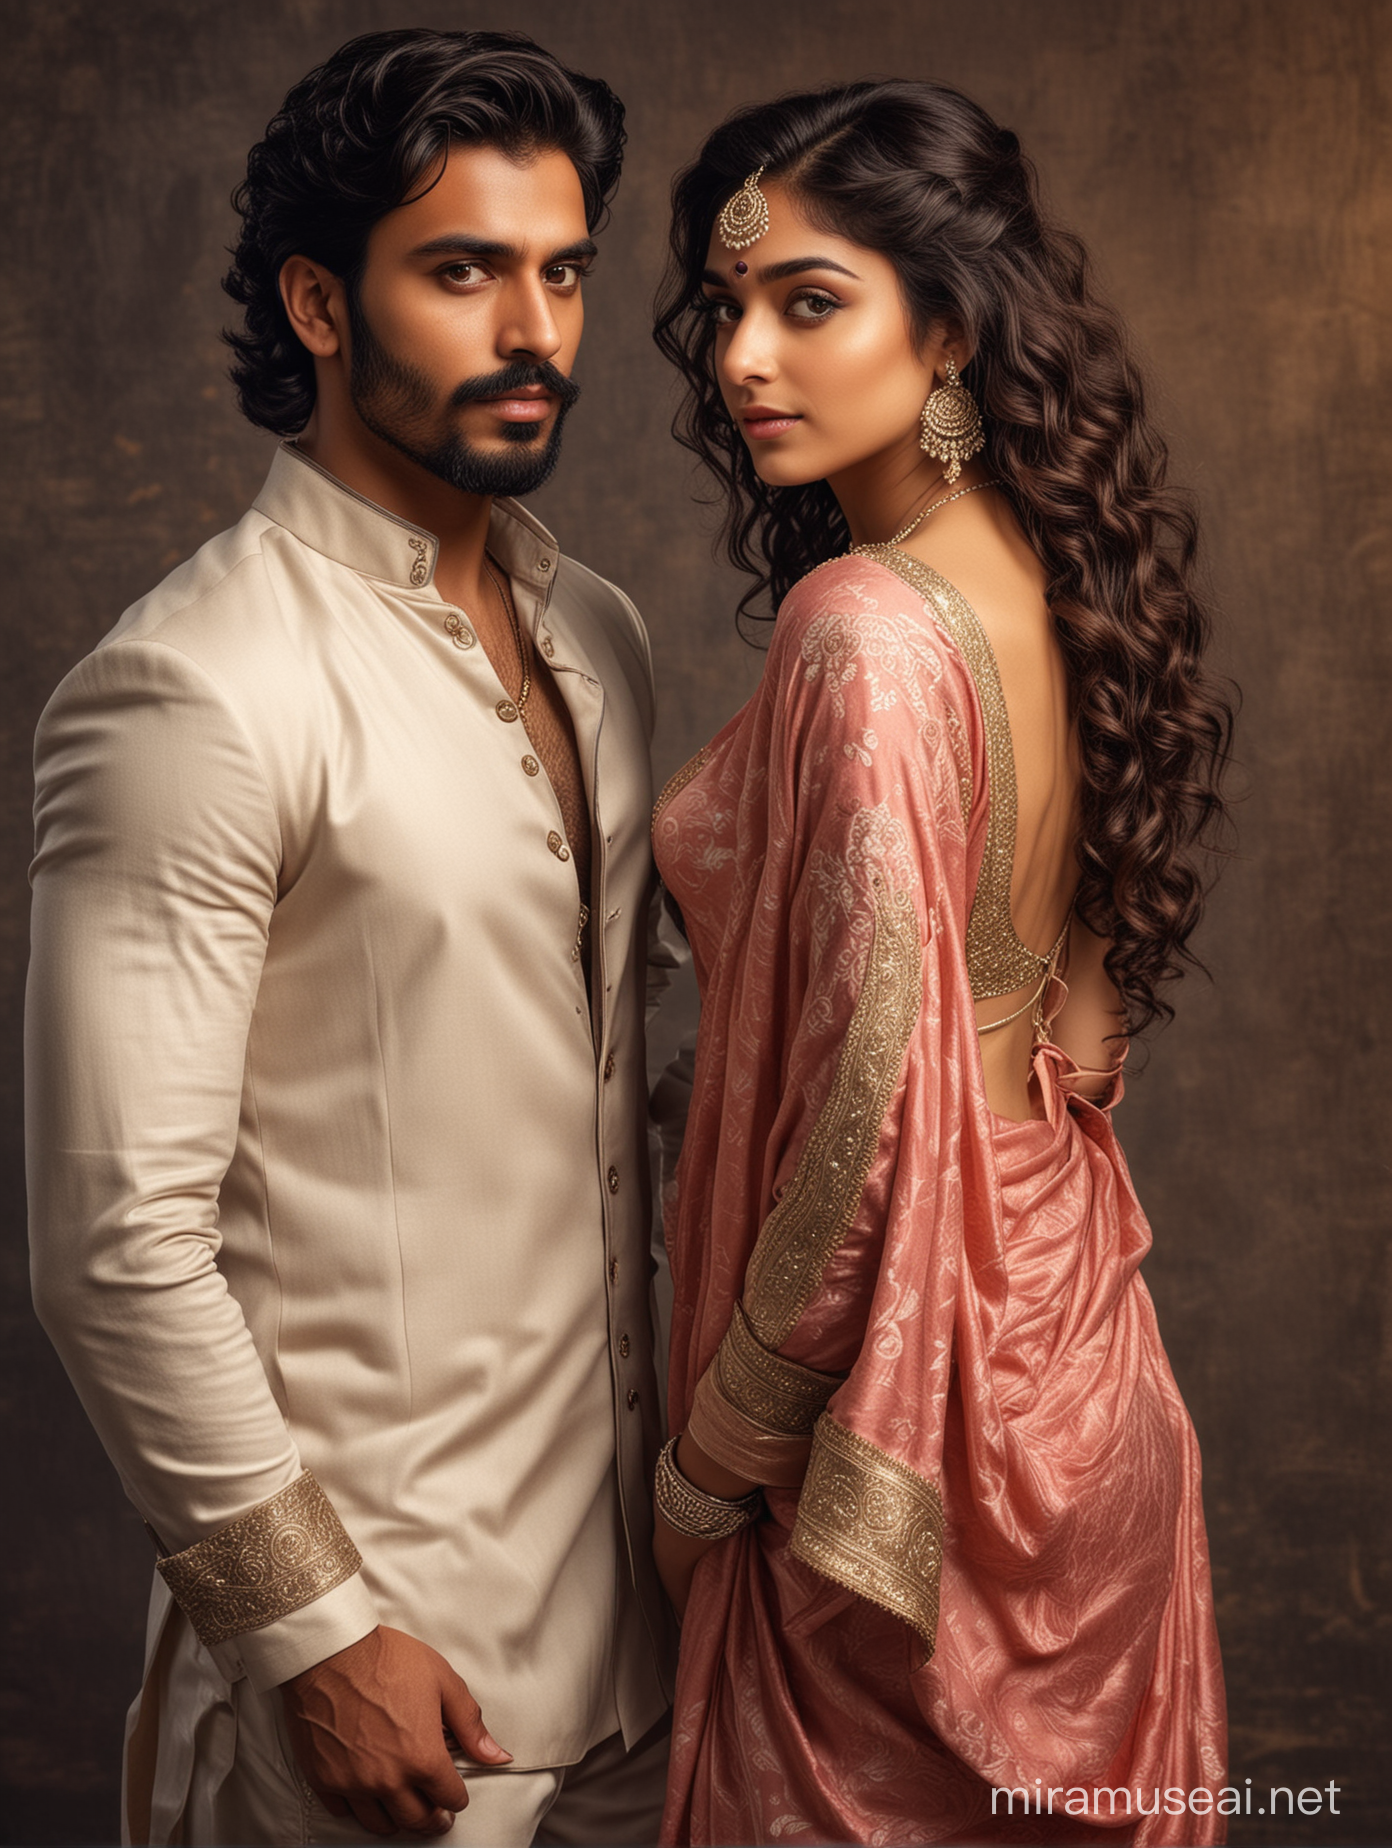 Elegant EuropeanIndian Couple in Arrogant Intimacy Fashionable Man and Beautiful Woman in Saree